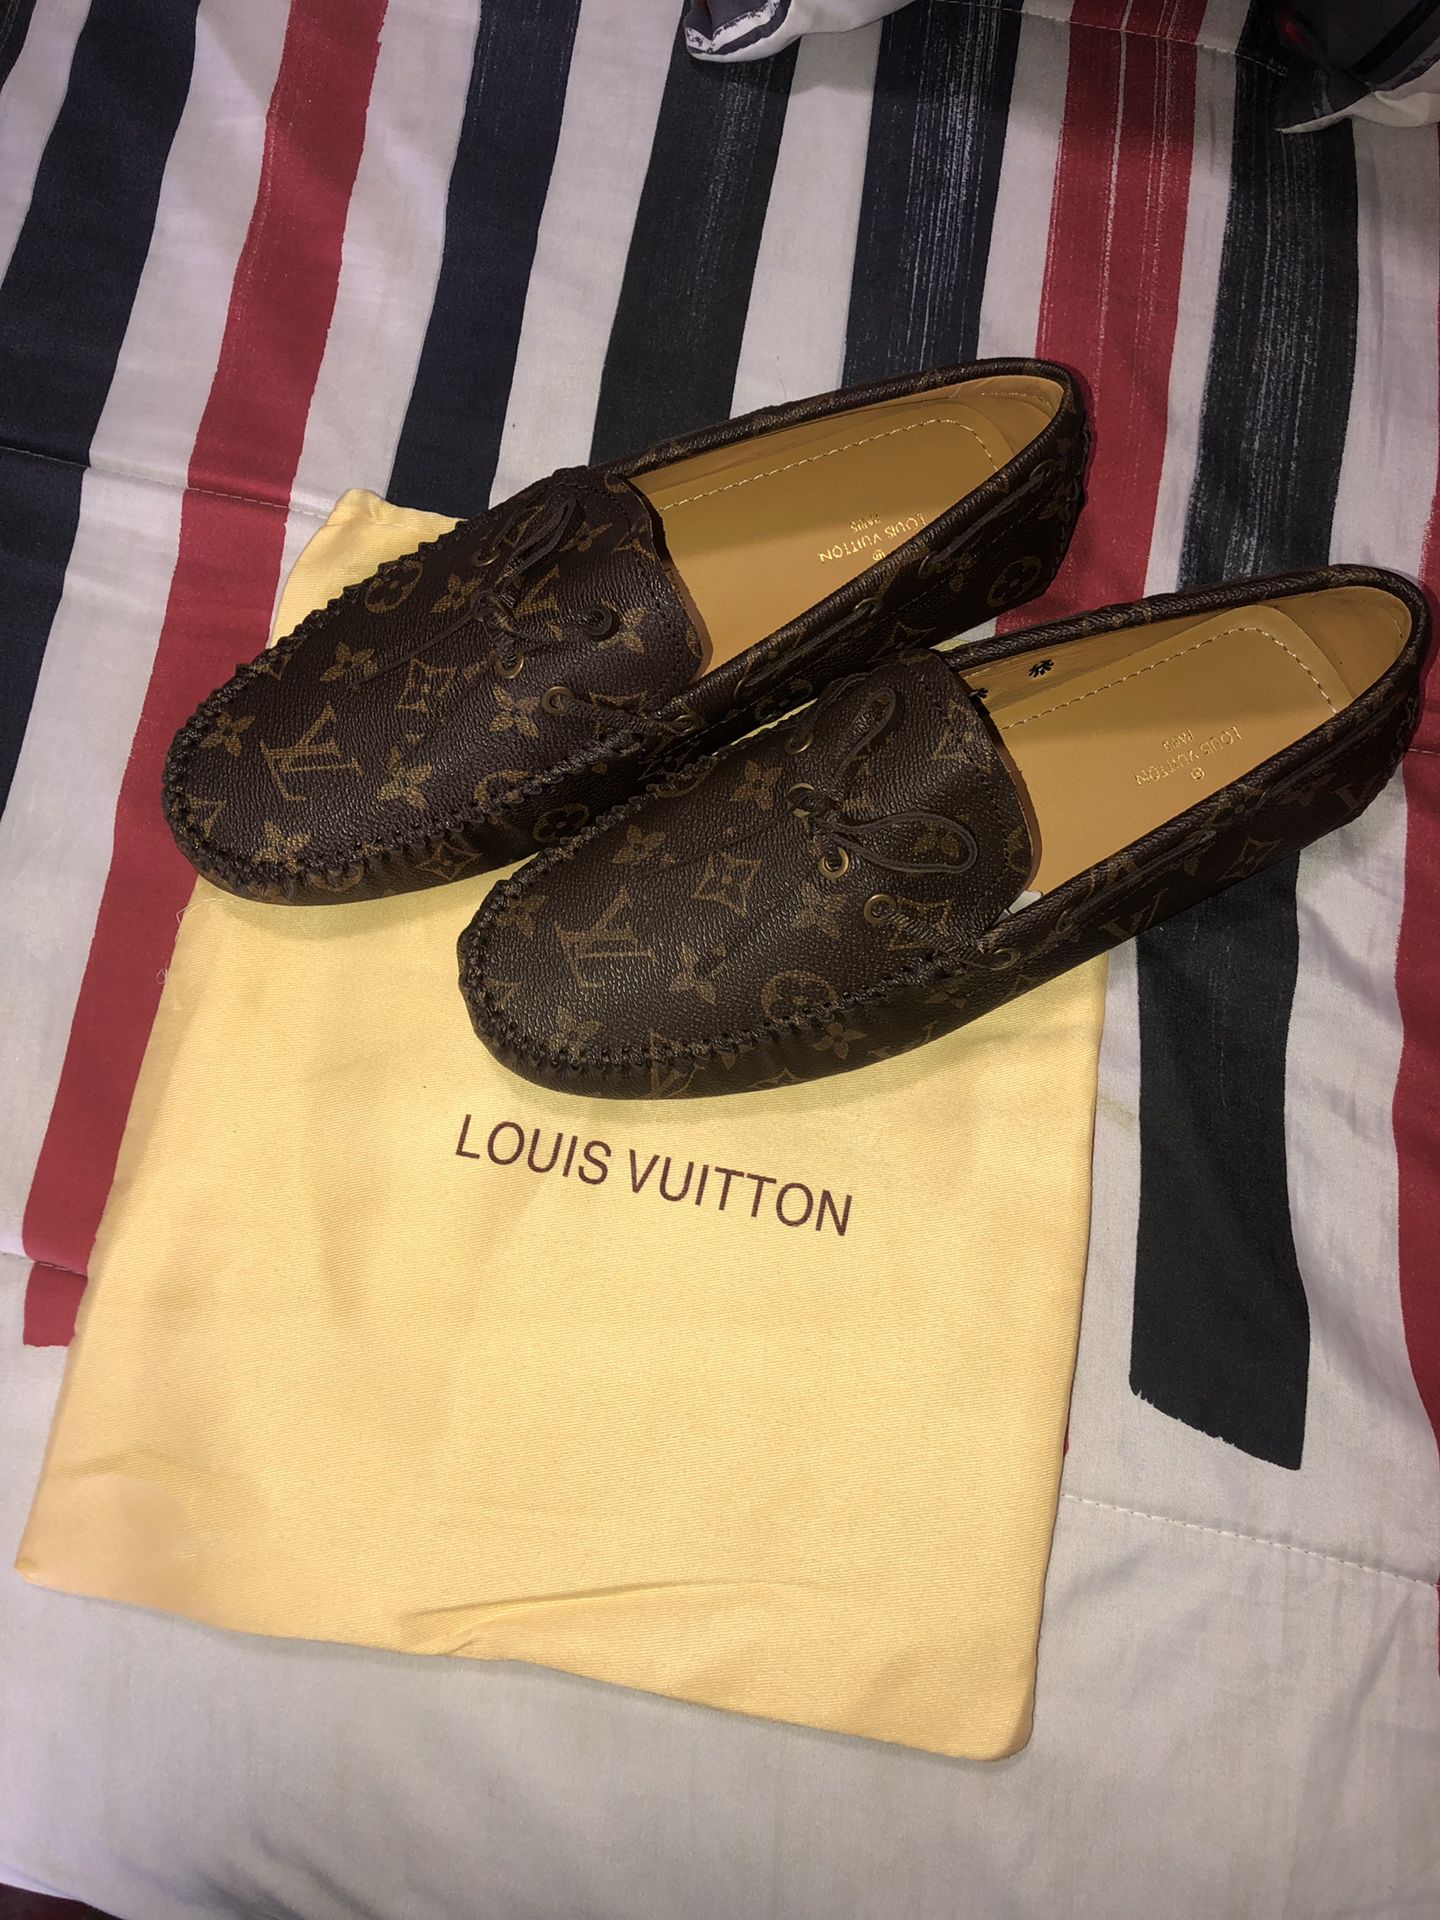 Louis Vuitton Box for Sale in Dallas, TX - OfferUp